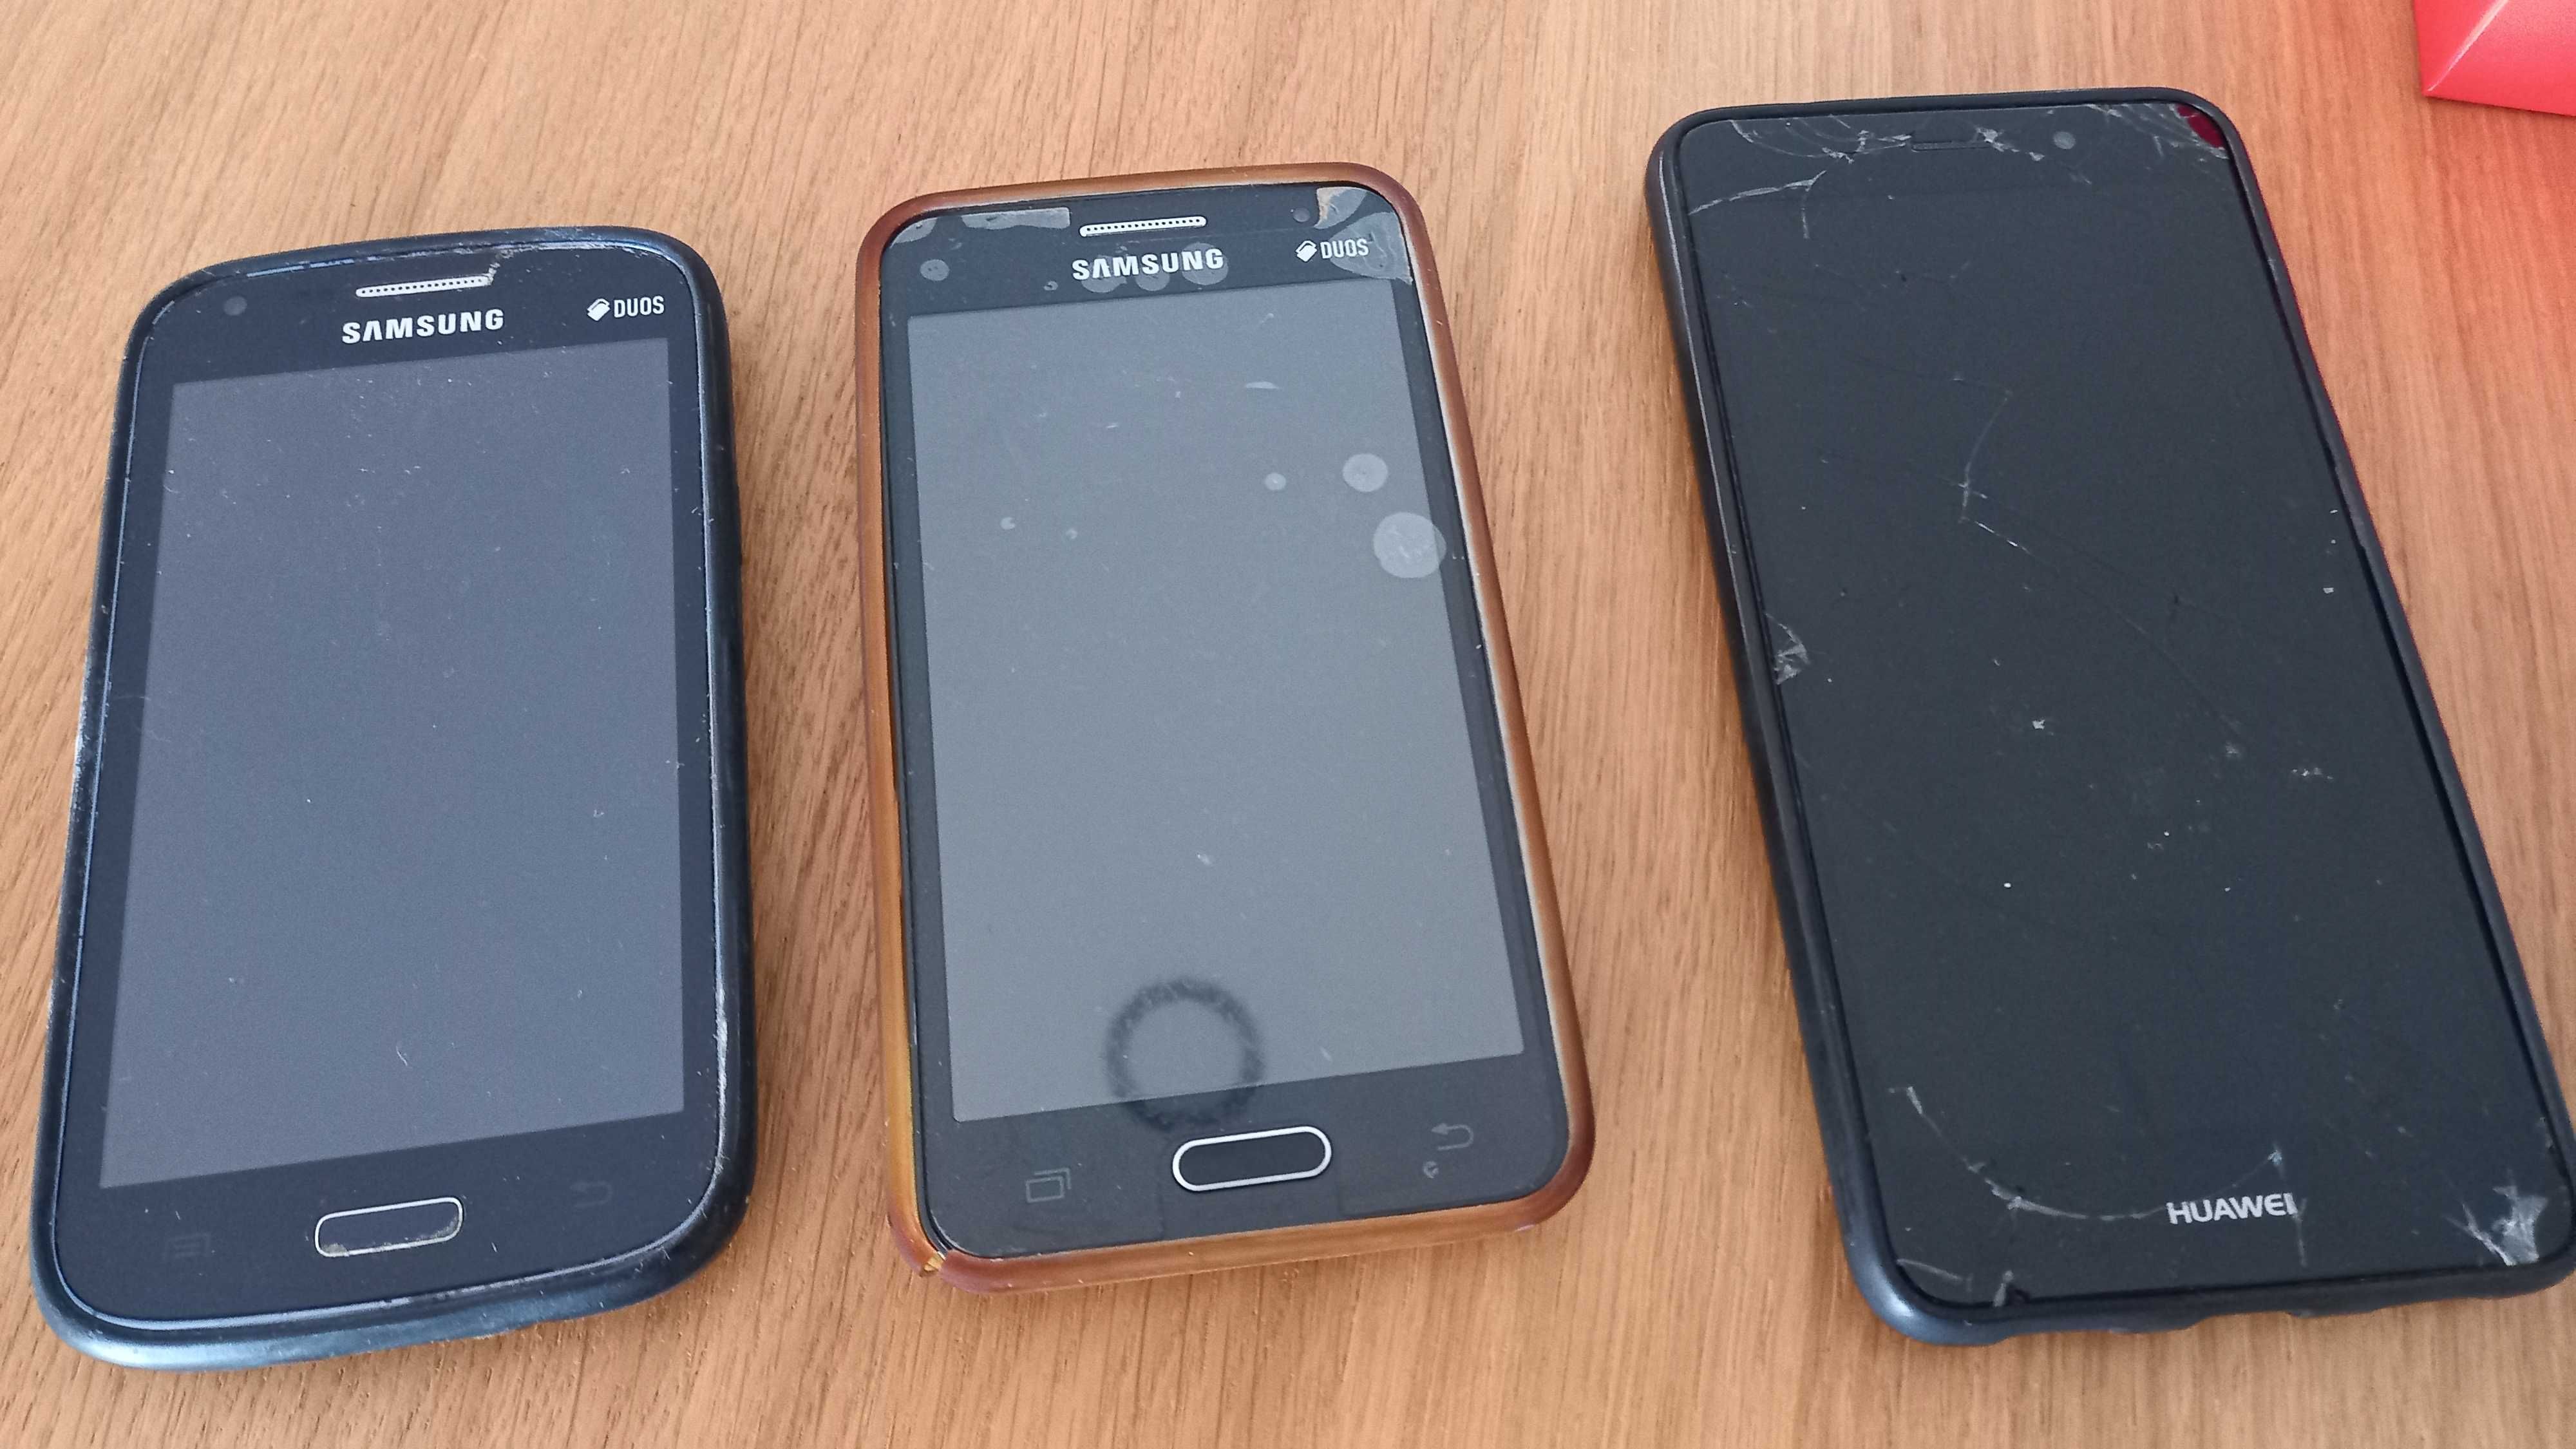 3 telemóveis + 1 PC